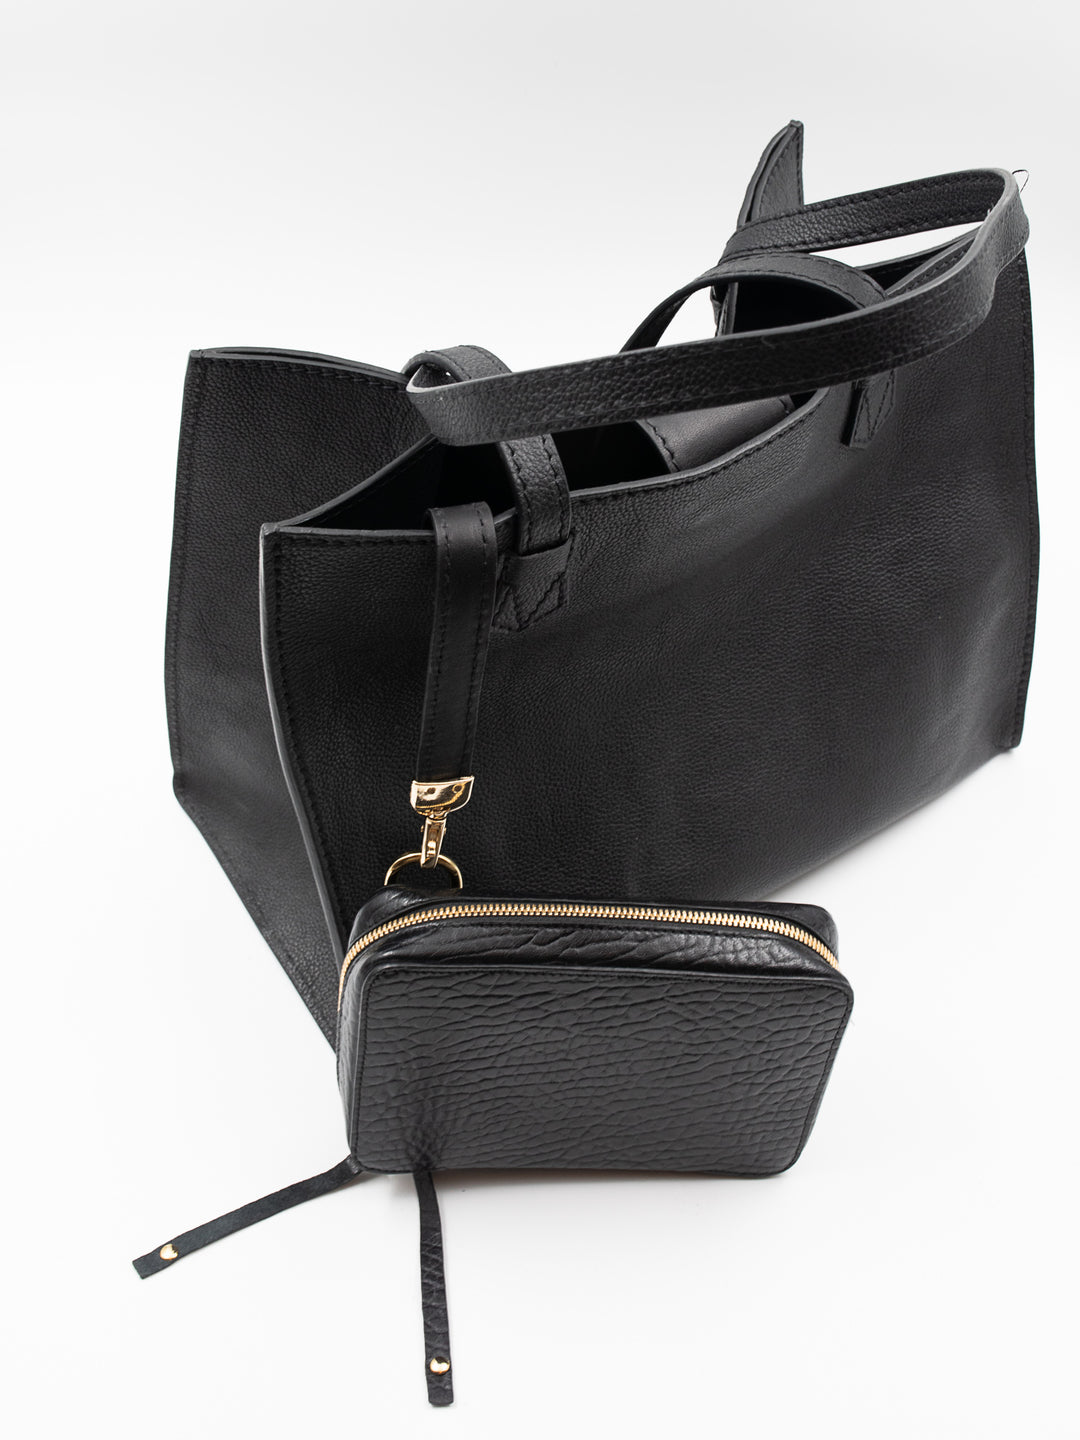 Blankens The Montauk Midi Black Grain small bag black leather bag with gold details